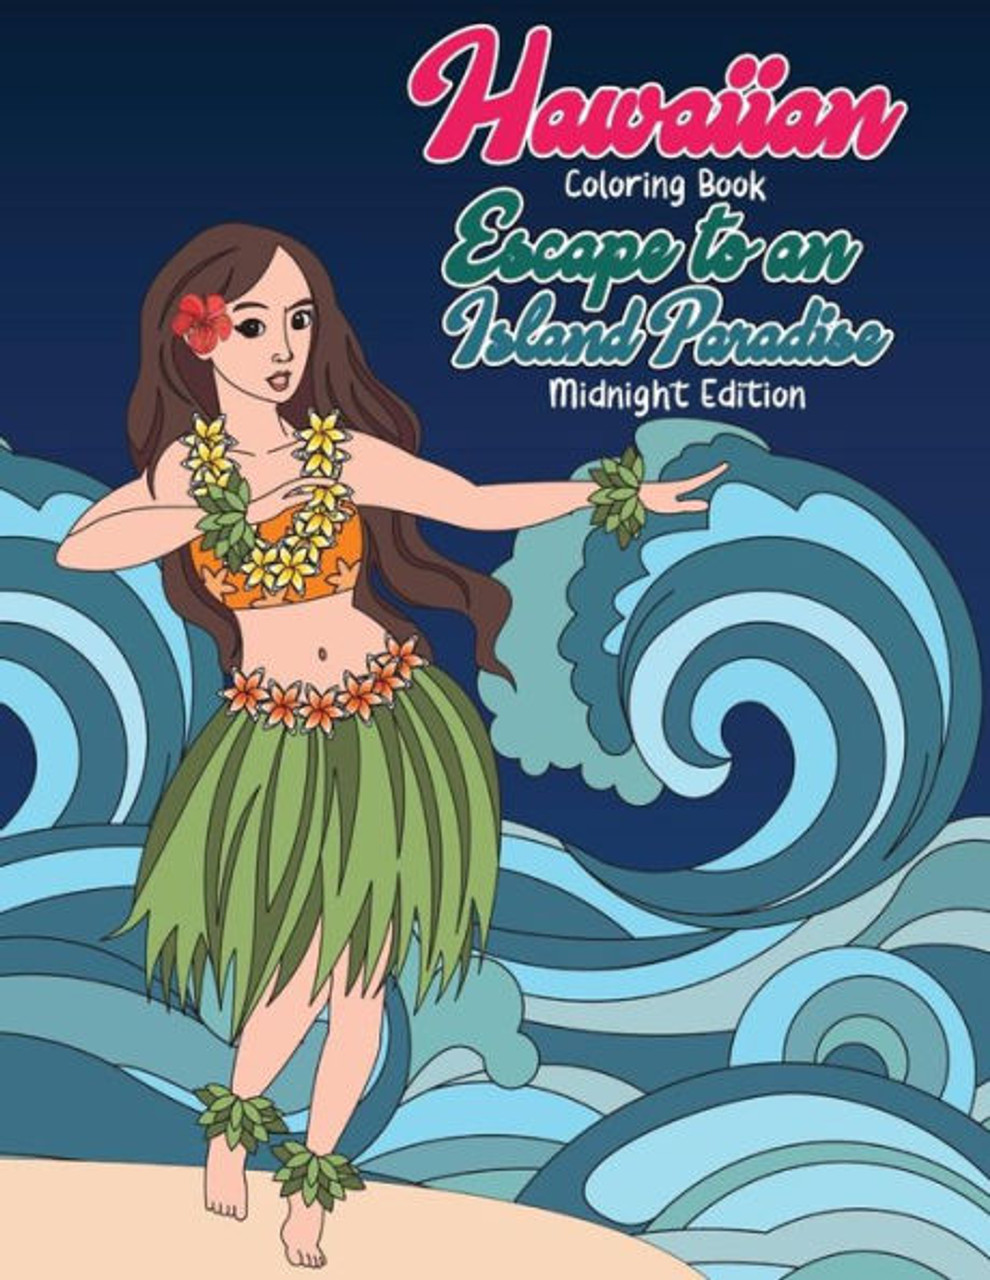 Travel Book Hawaii - Artists' edition - Travel